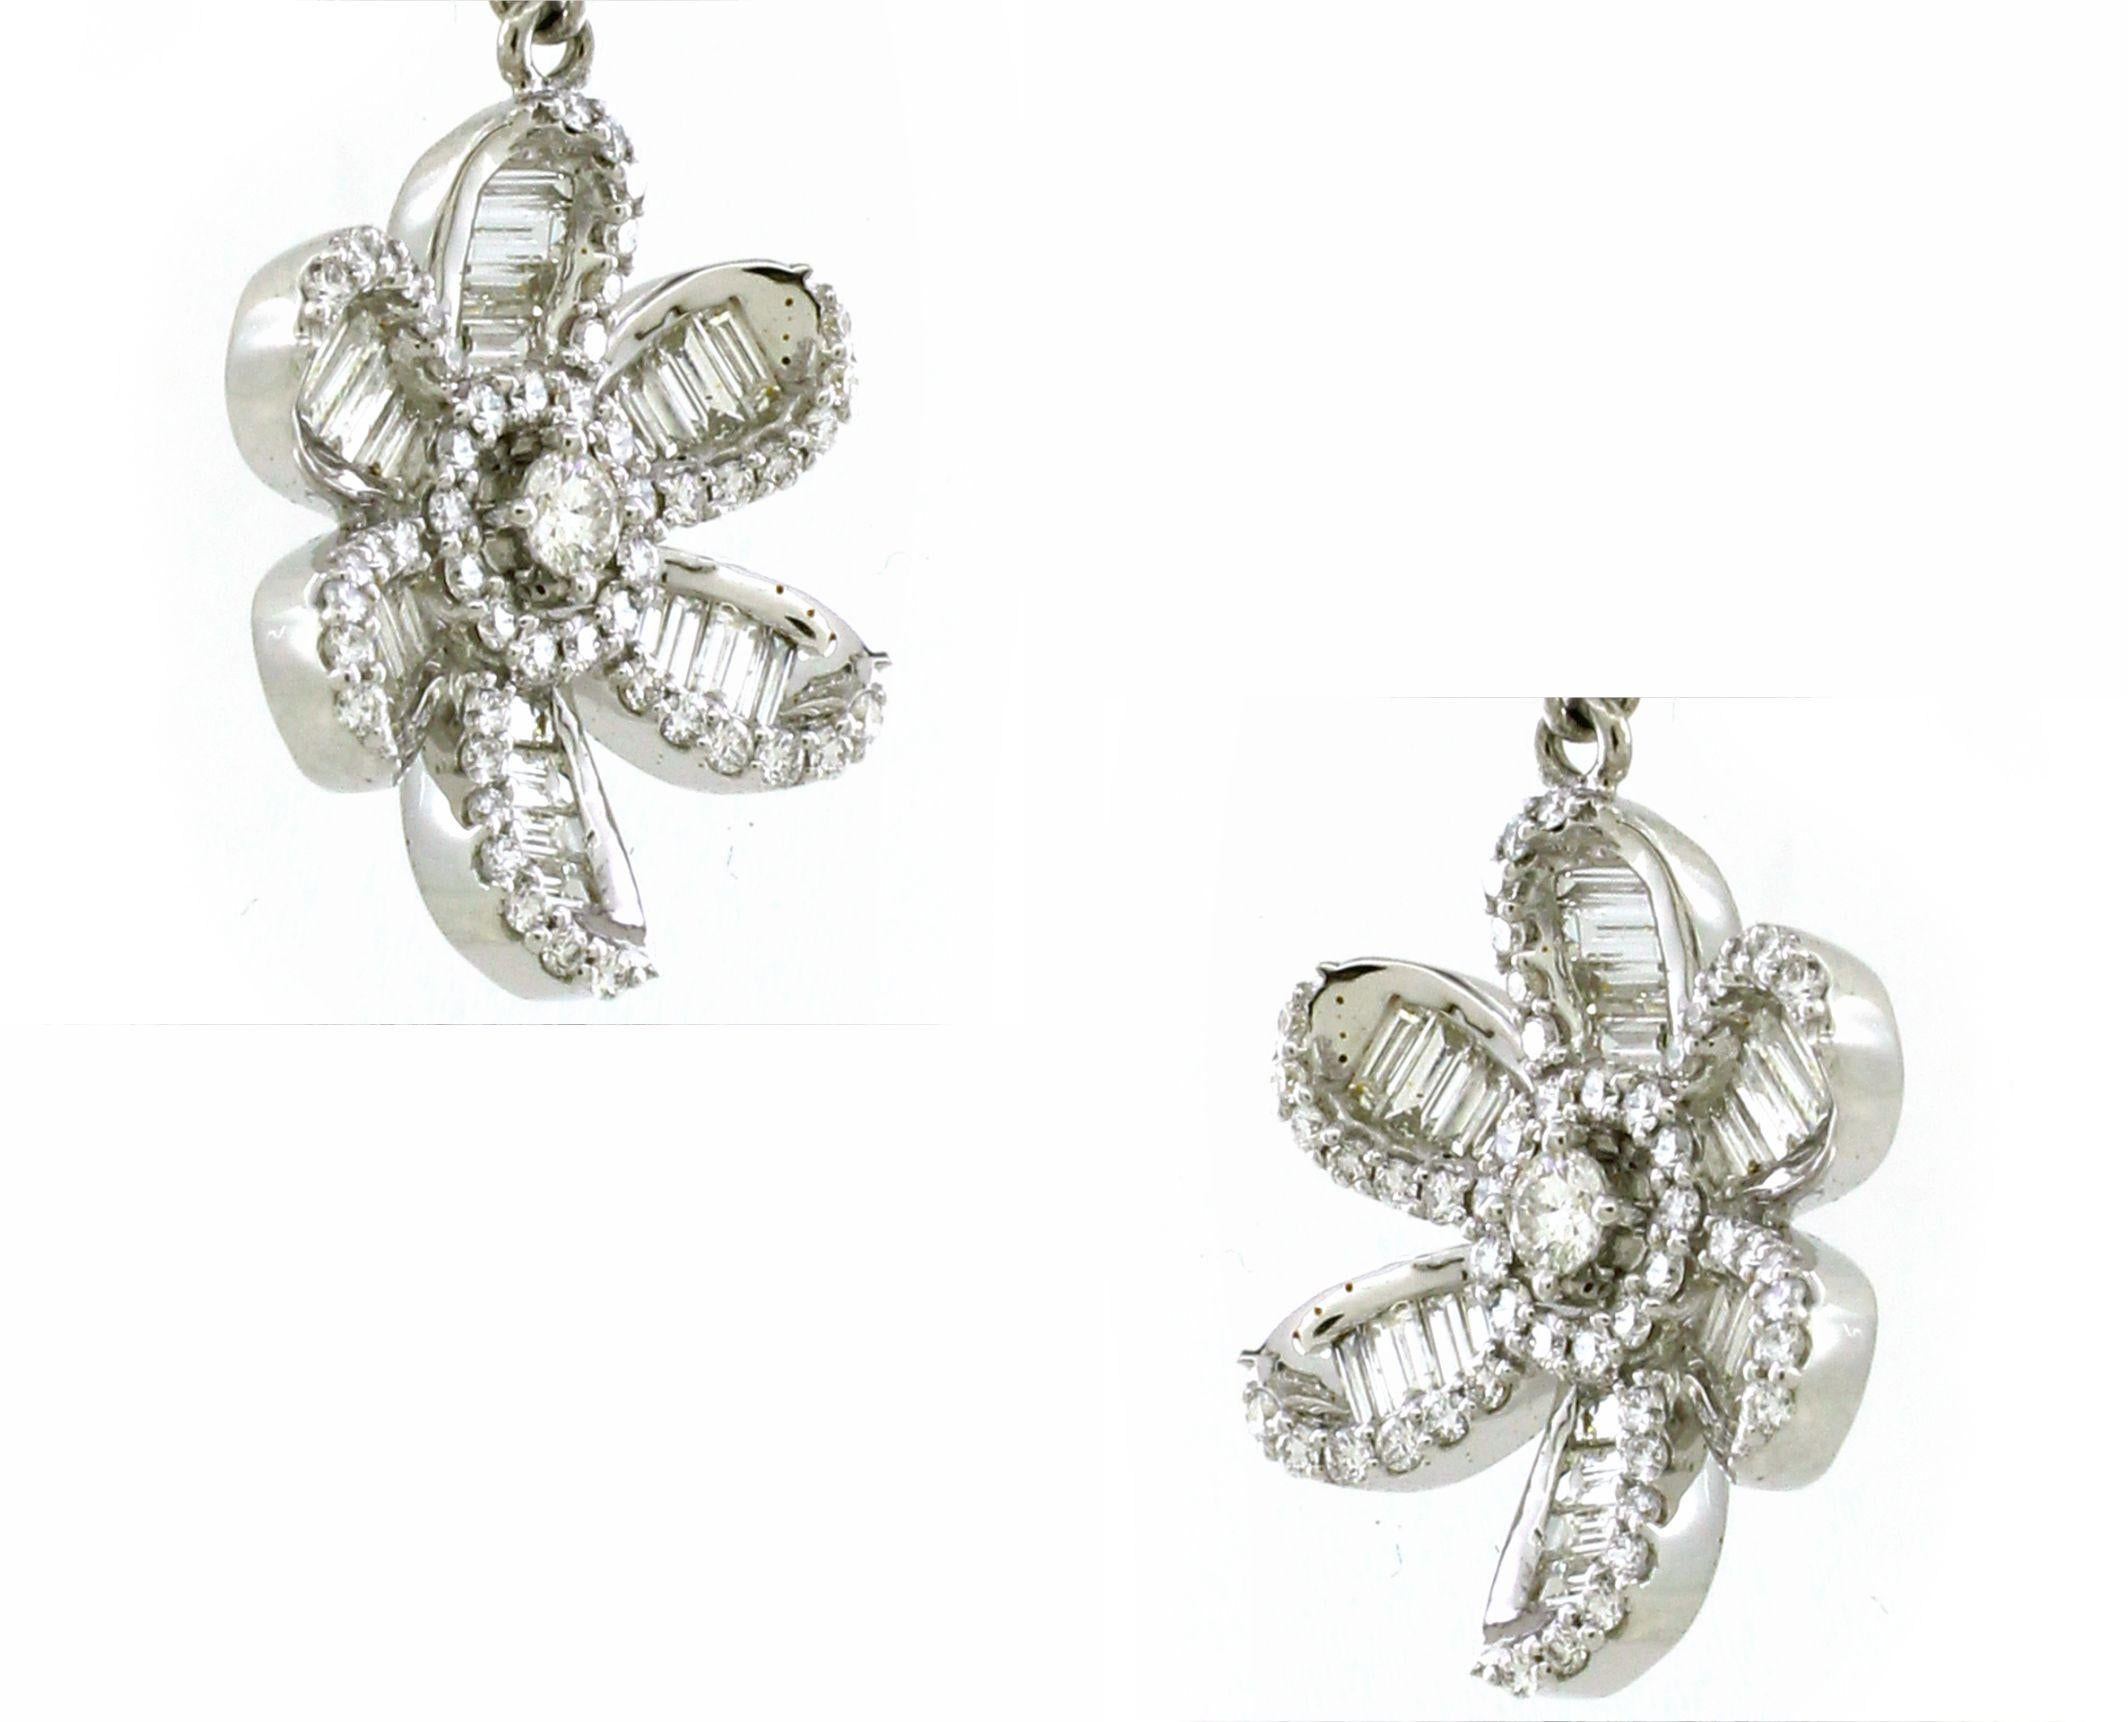 Baguette Cut 1.92 carats of White Diamond Earrings For Sale